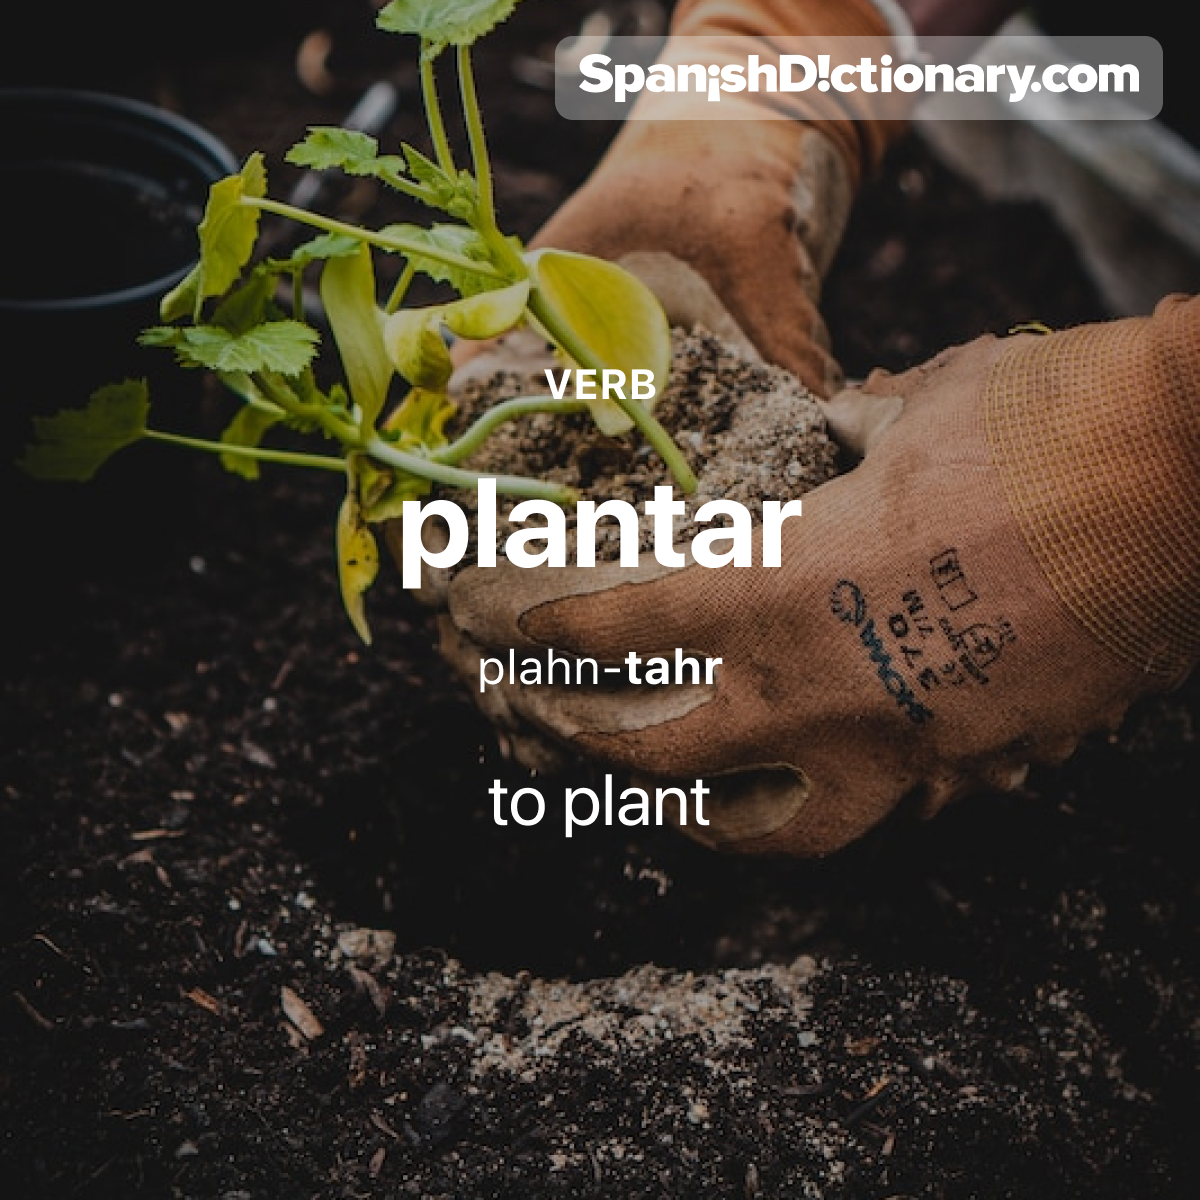 Today's #WordOfTheDay is 'plantar.' 🌱🌳 For example: Plantamos varios árboles en la primavera. - We planted several trees in the spring.
.
.
.
#EstudiaEspañol #StudySpanish #AprendeEspañol #LearnSpanish #Español #Spanish #LearningSpanish #PalabraDelDia #plantar #plant